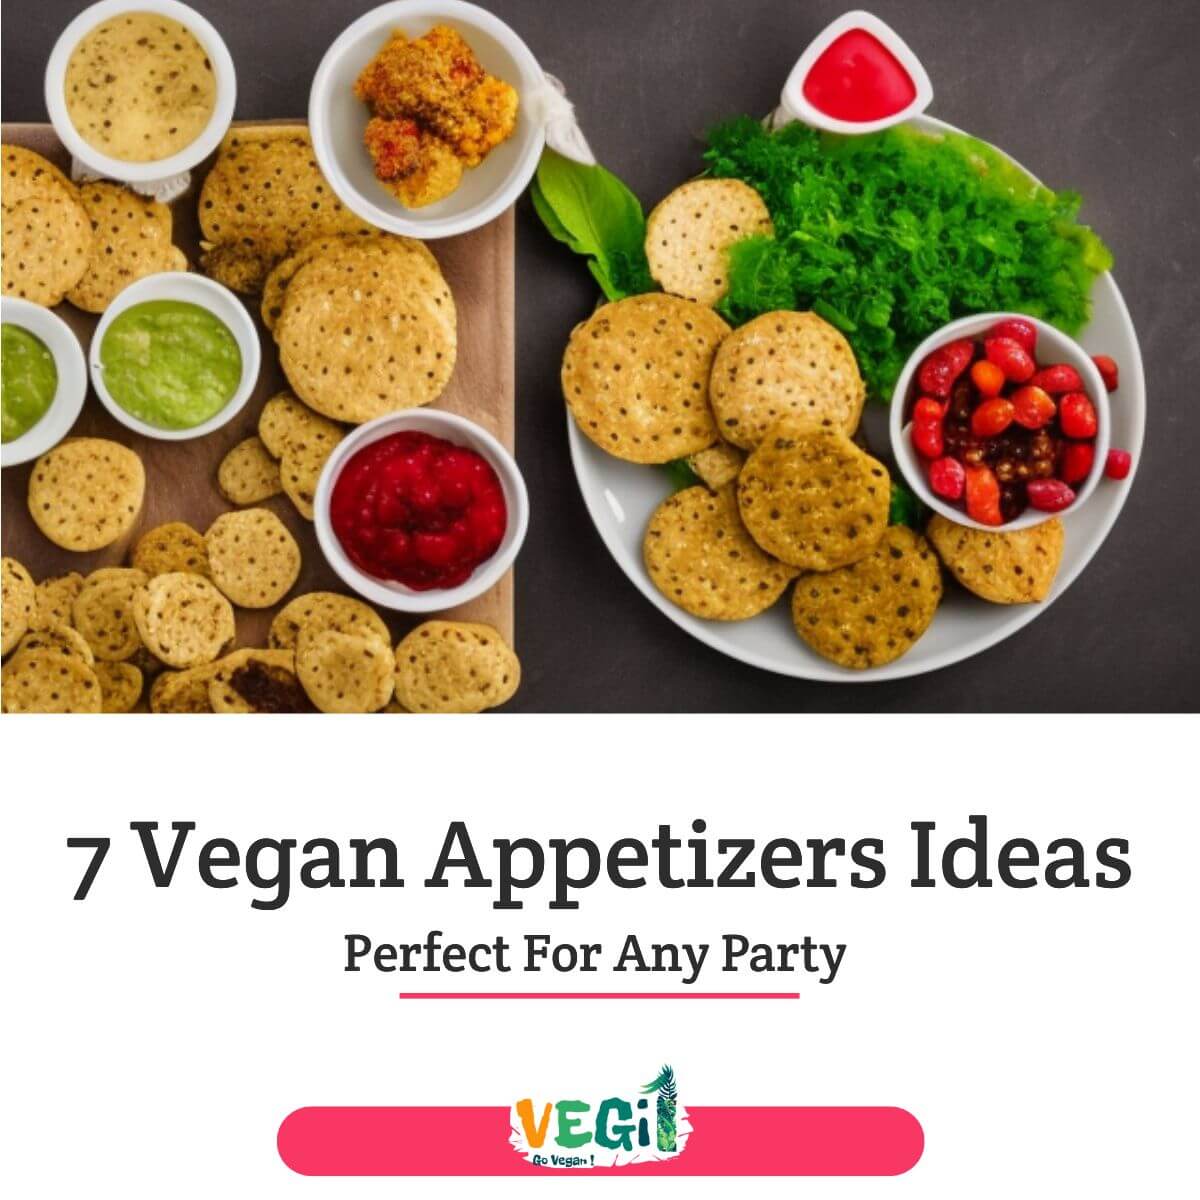 7 Vegan Appetizers Ideas